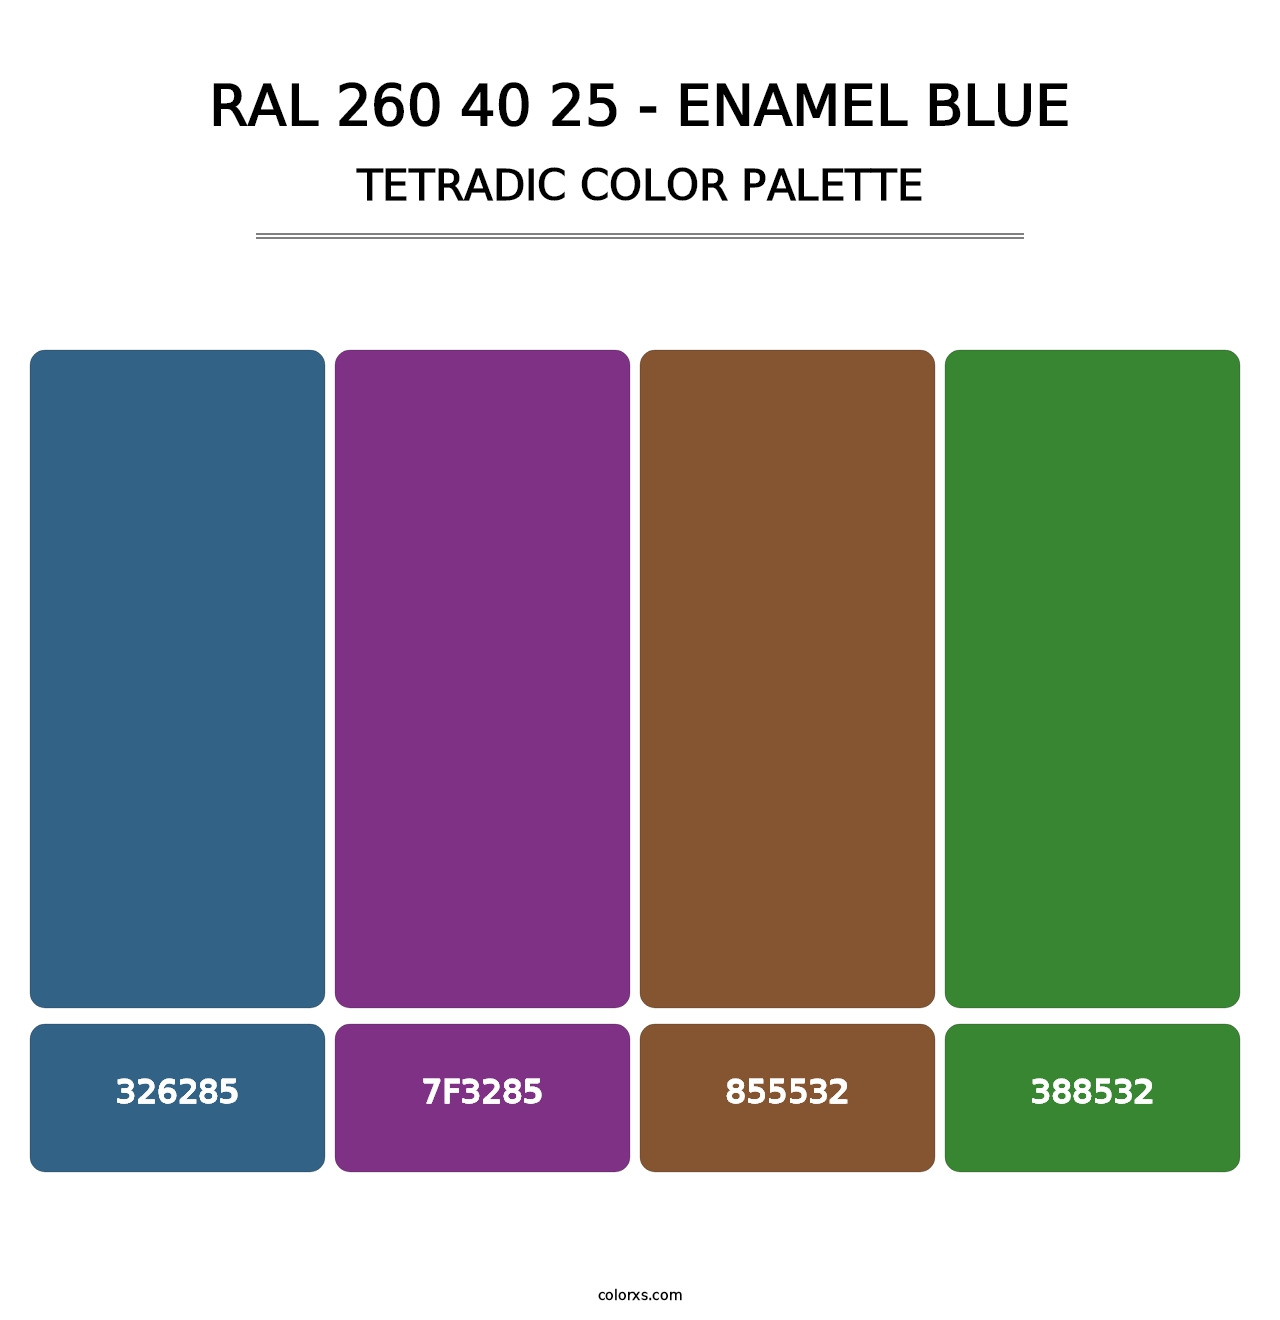 RAL 260 40 25 - Enamel Blue - Tetradic Color Palette